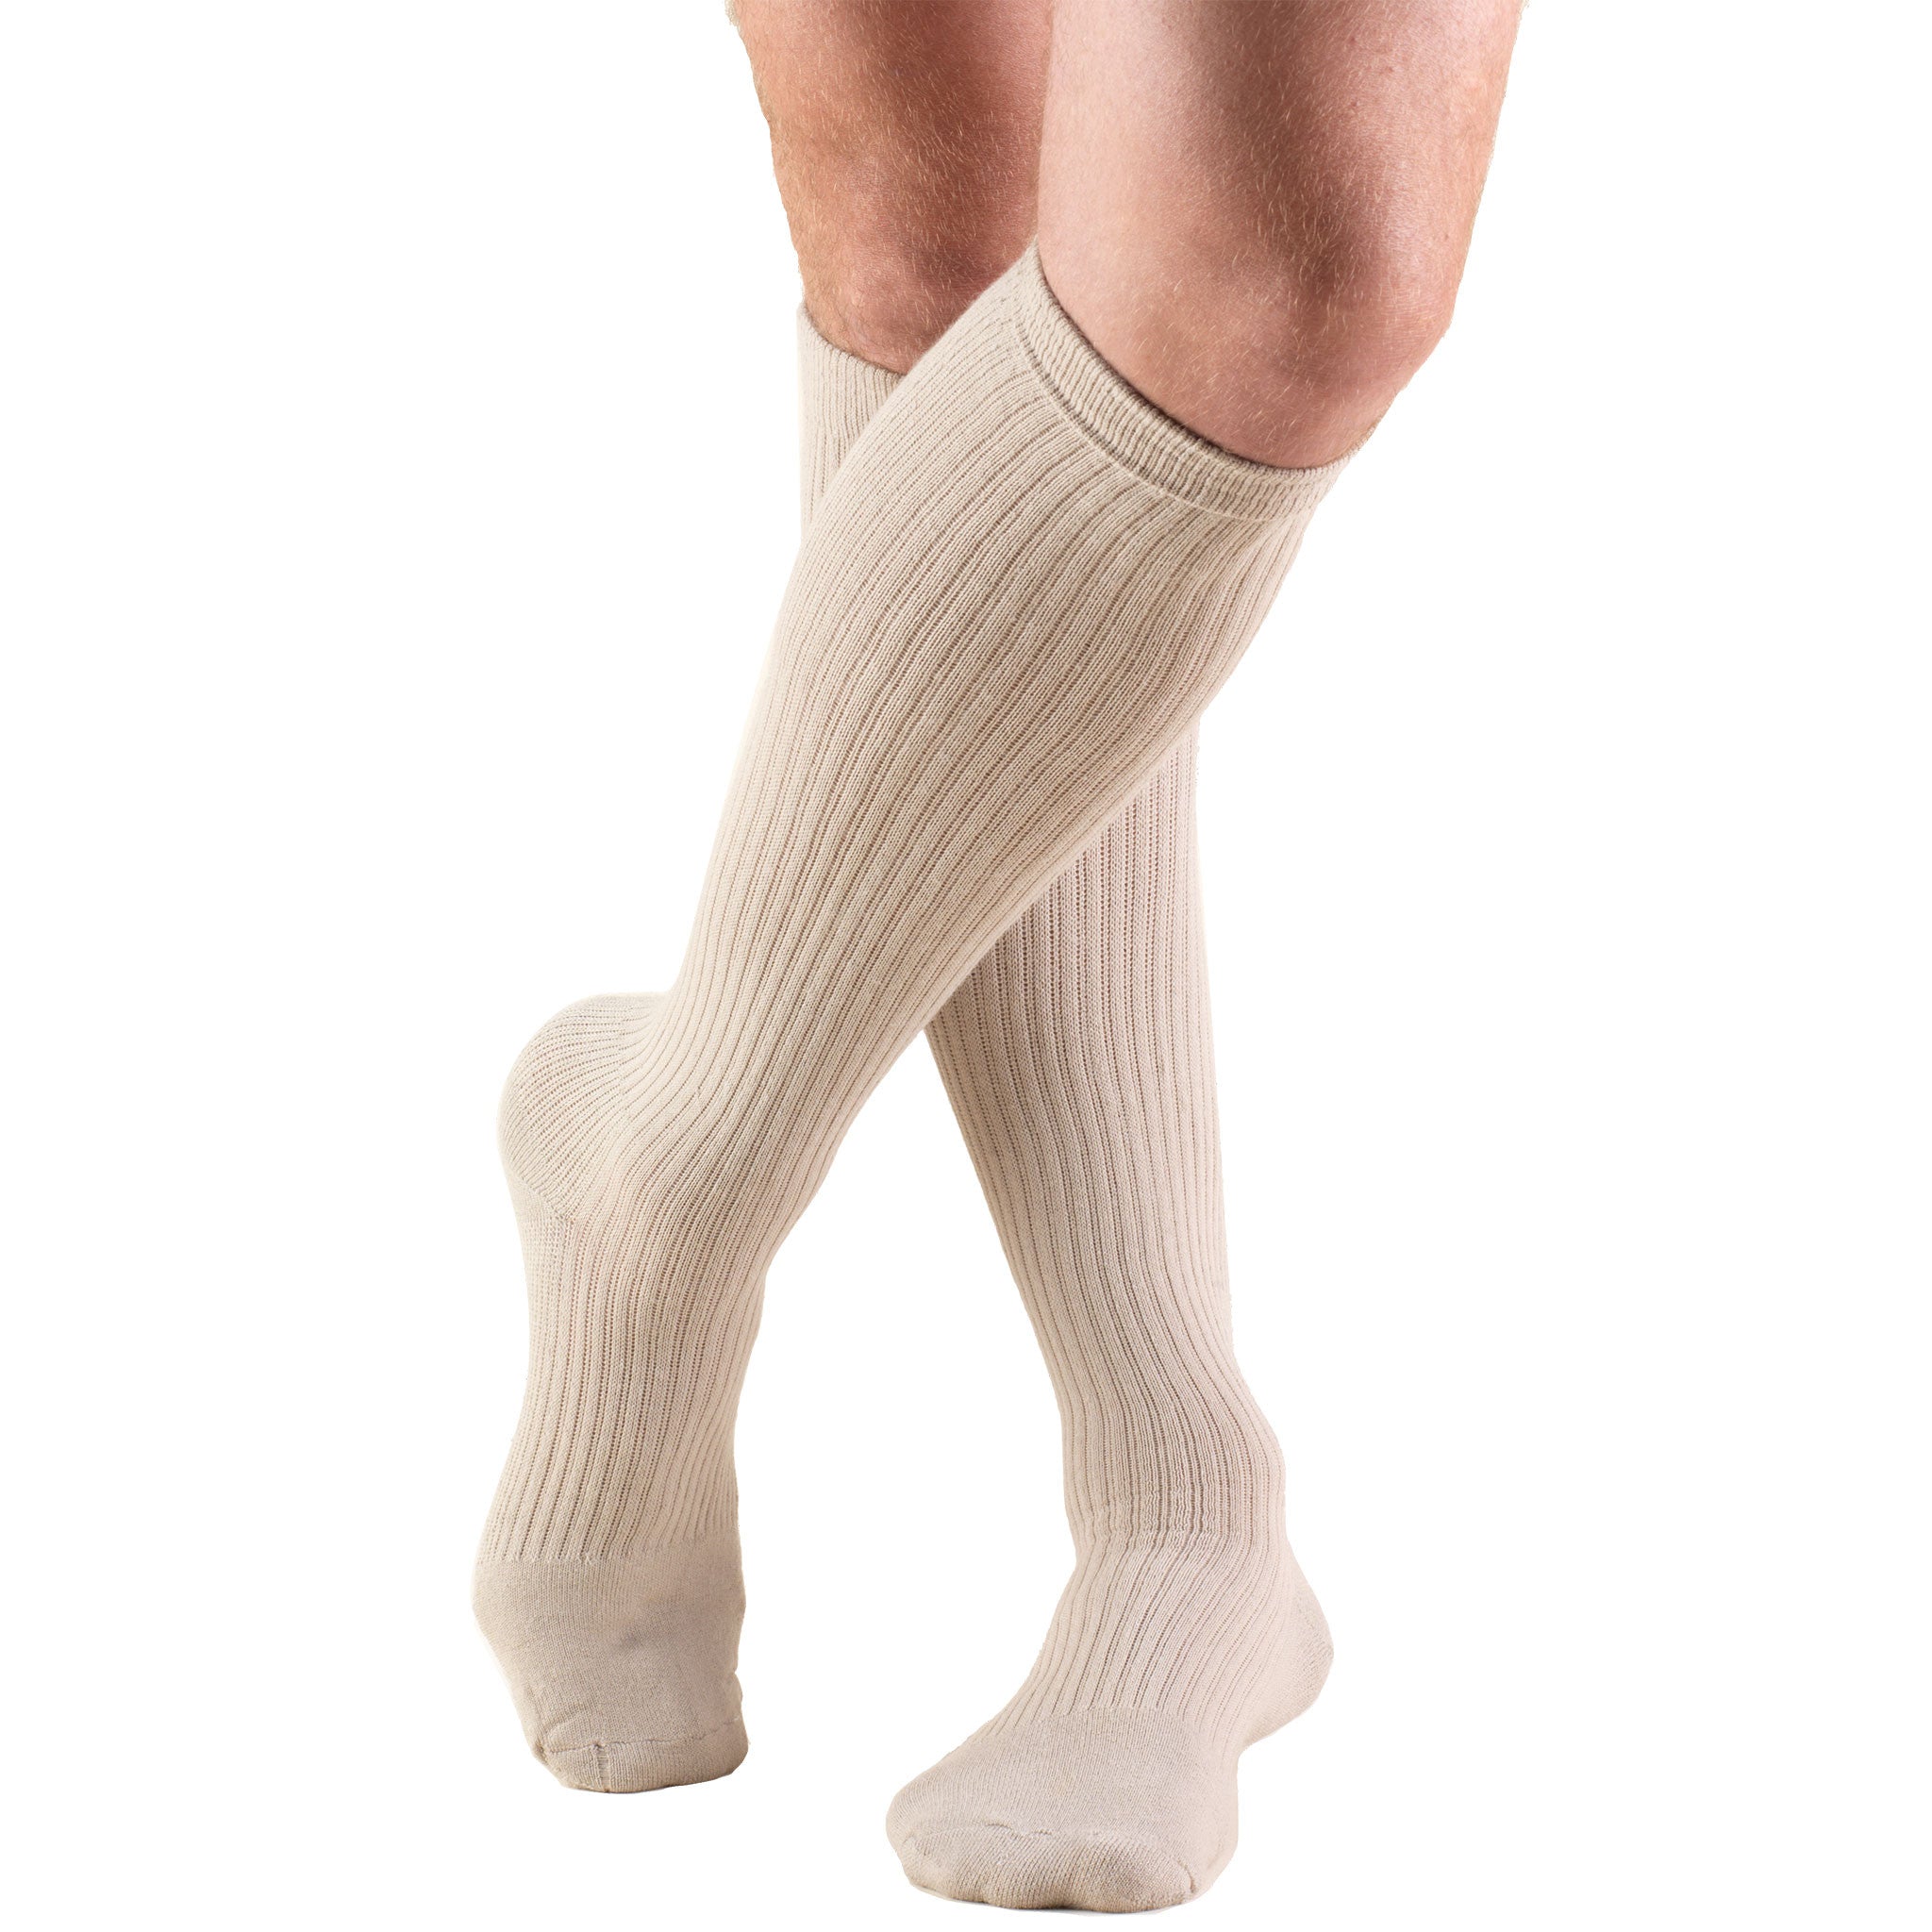 1933 / Truform Compression Socks / 15-20 mmHg / Knee High